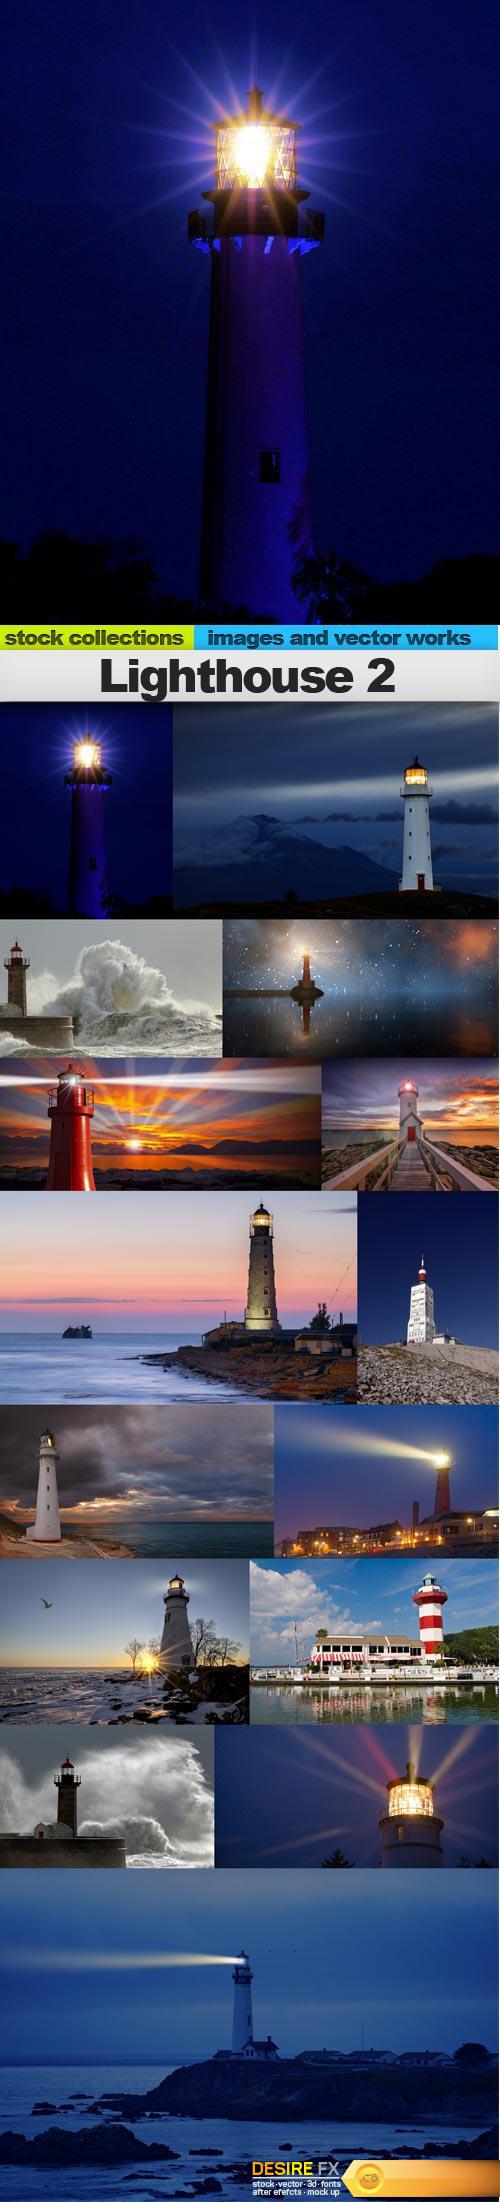 Lighthouse 2, 15 x UHQ JPEG